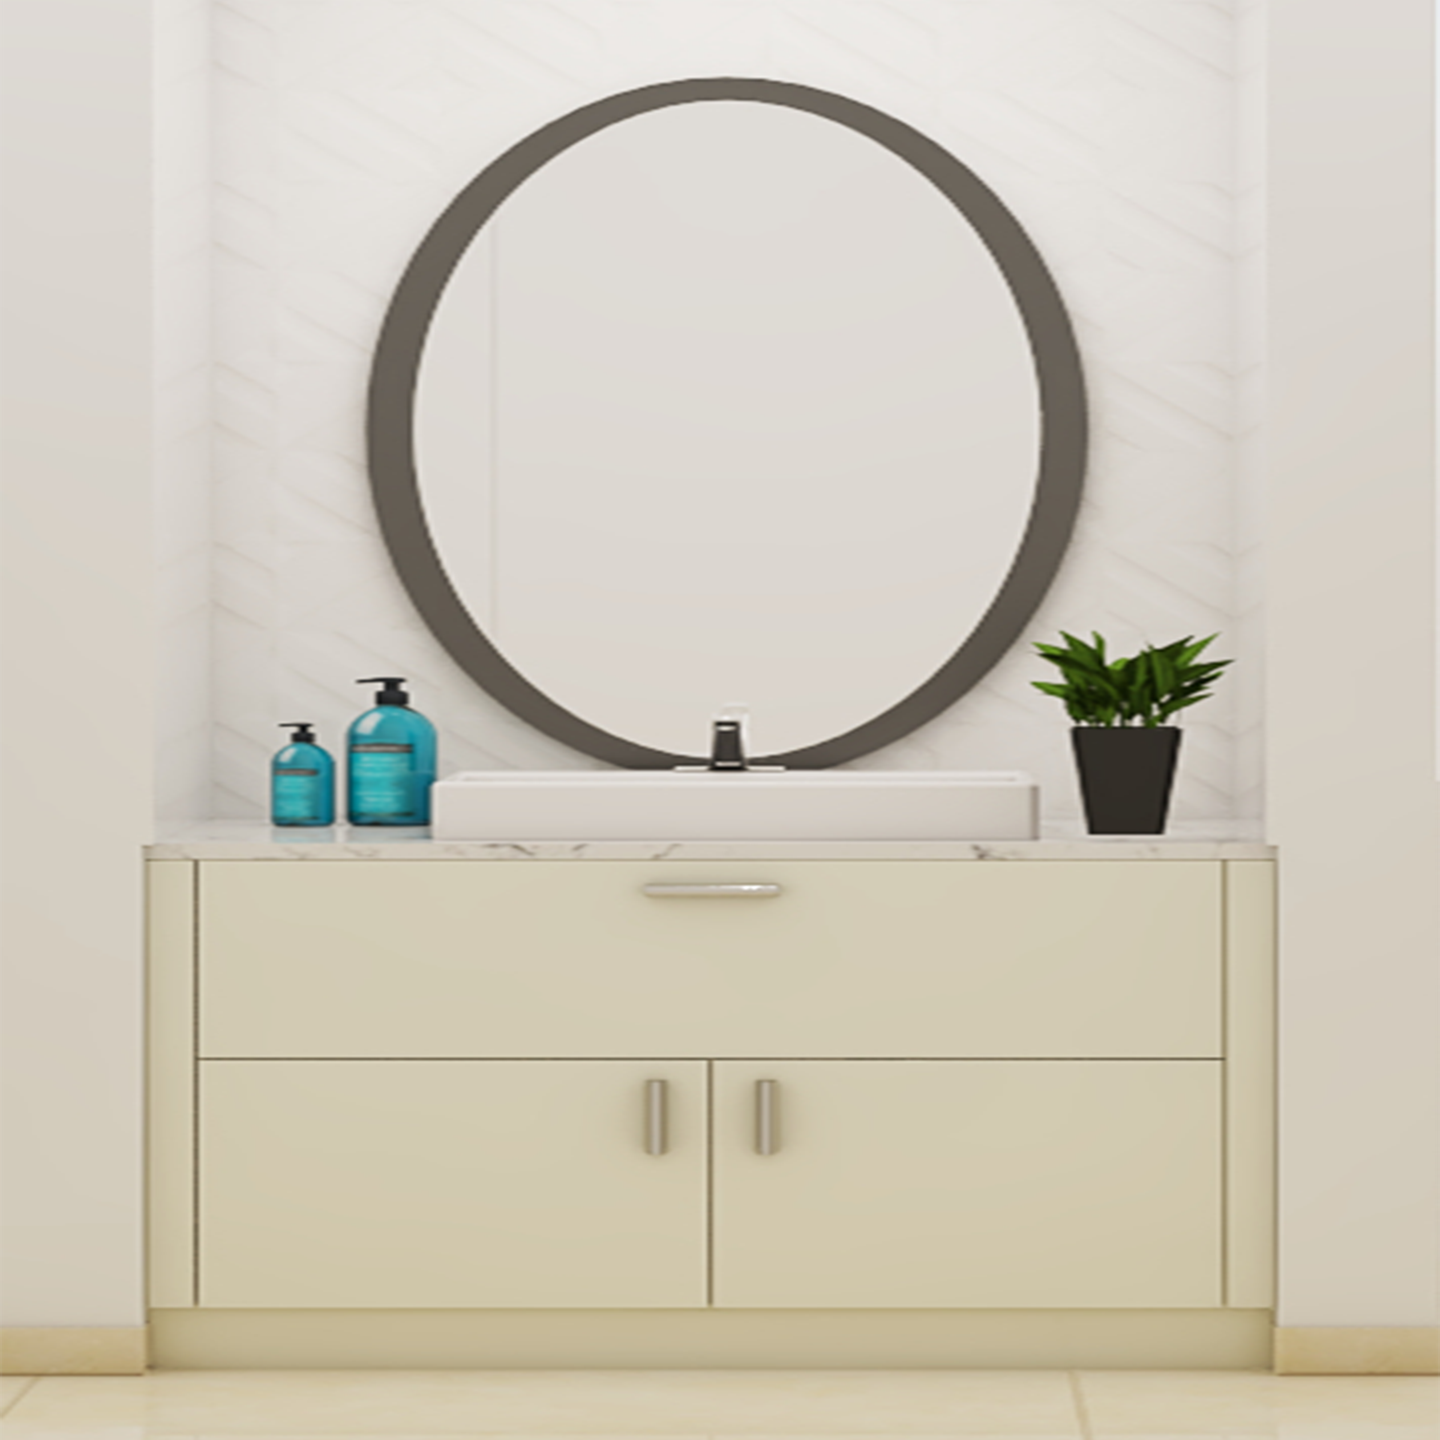 Low-maintenance Modern Design Bathroom - Livspace